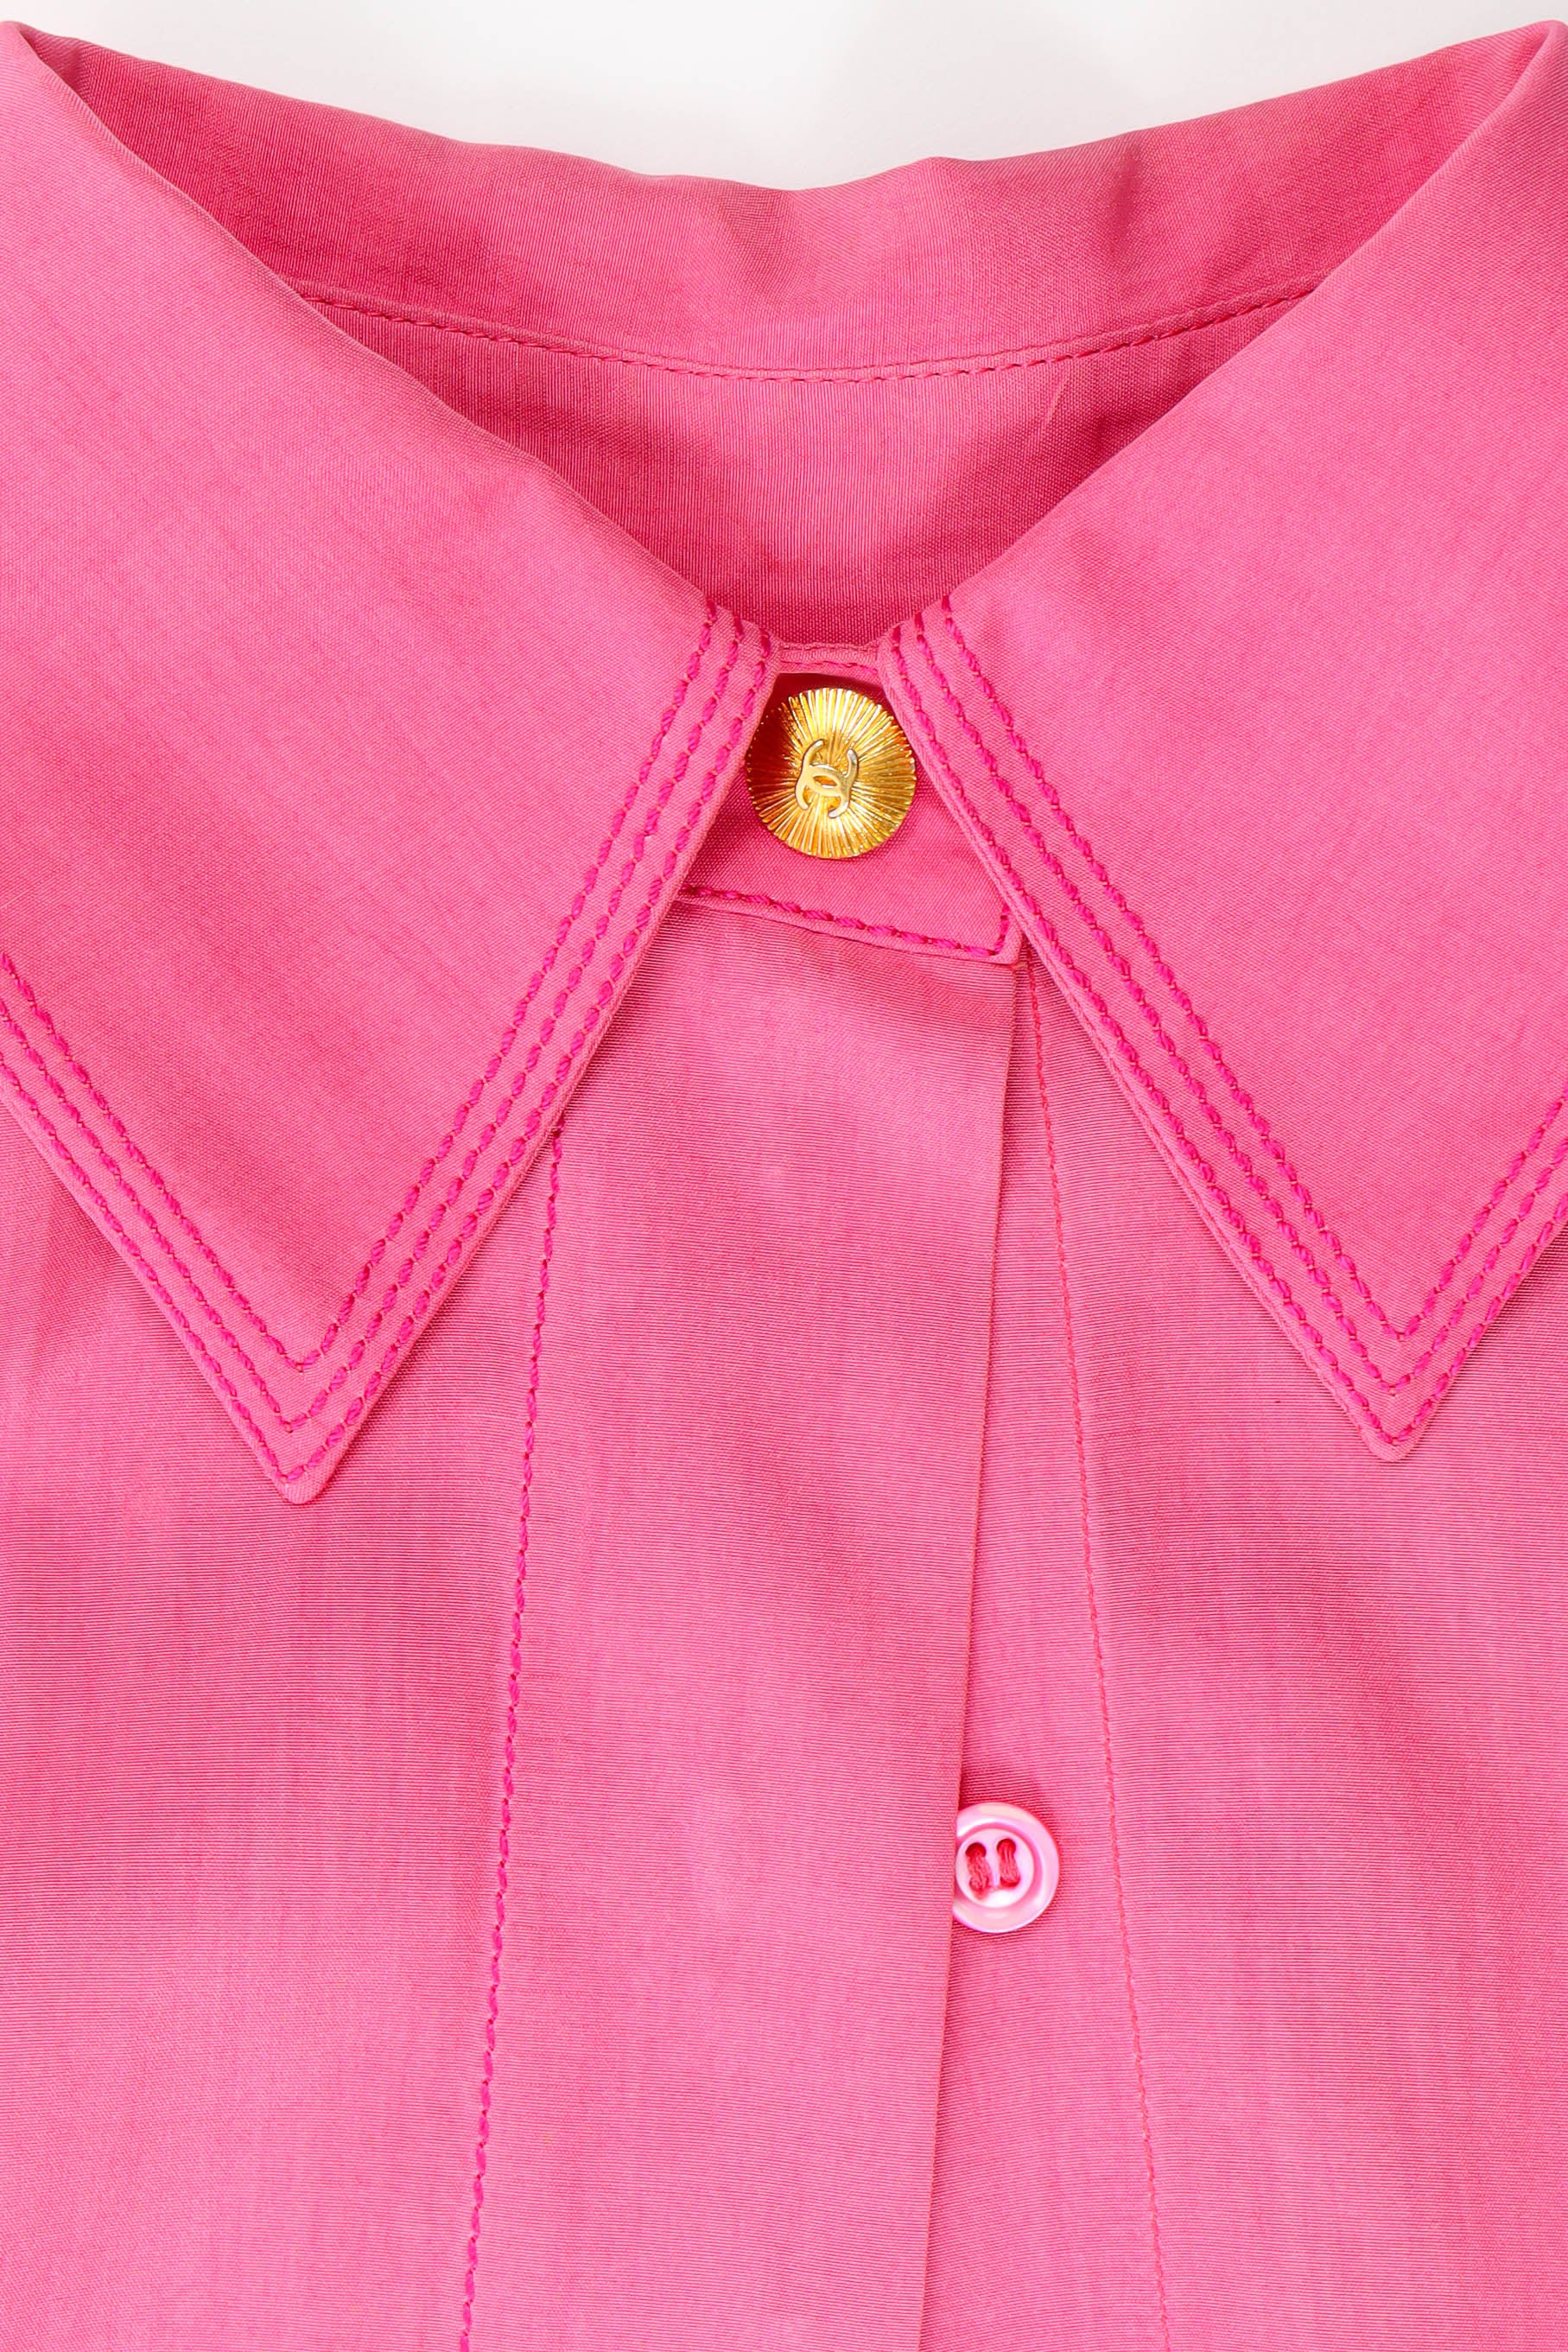 Vintage Chanel CC Pocket Button Blouse collar button/pink button @ Recess Los Angeles